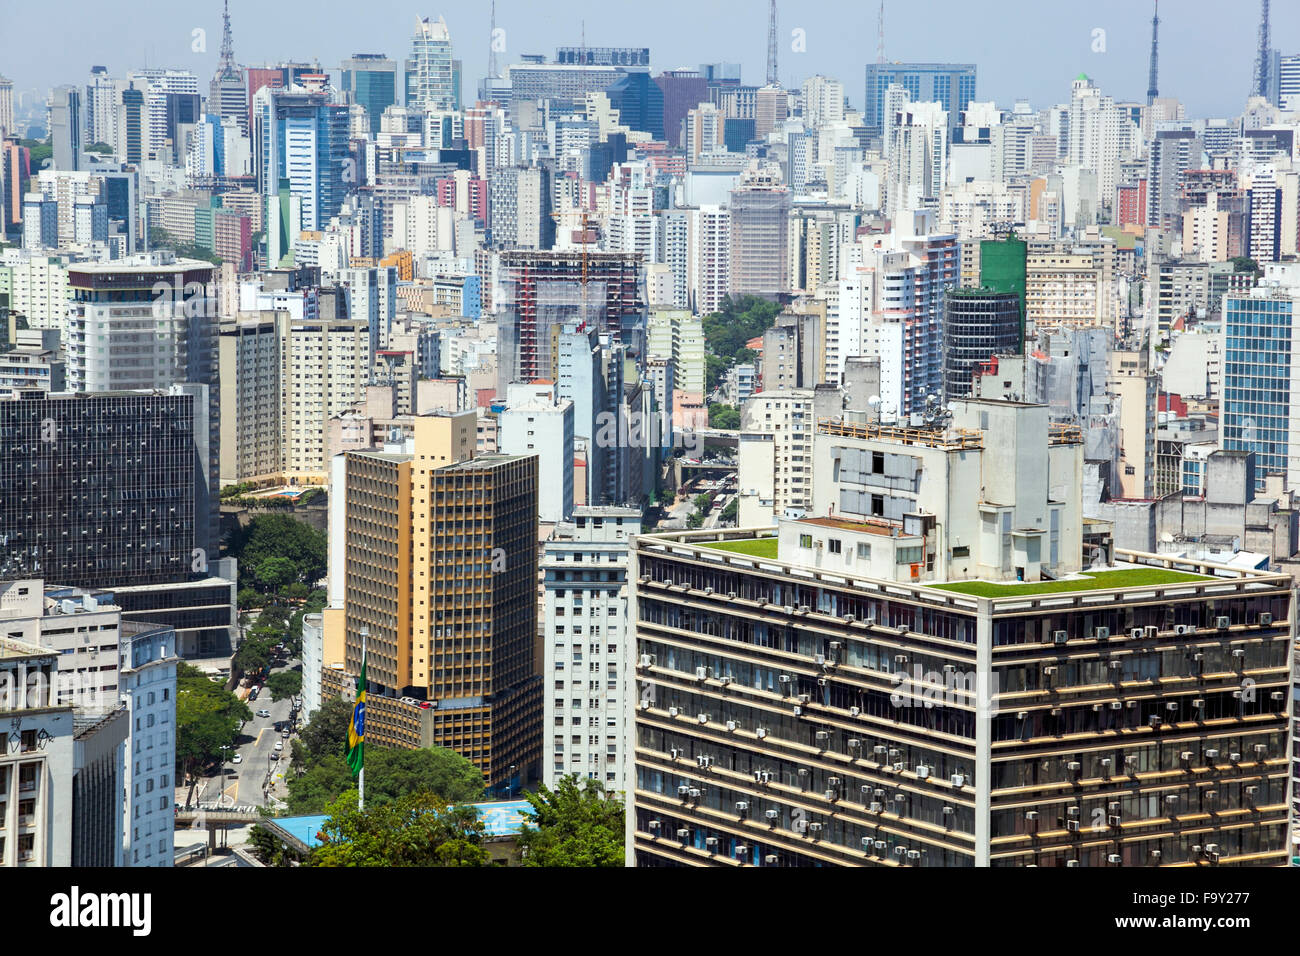 Brazil, Sao Paulo 2013 - Sao Paulo skyline, view form rooftop restaurant and observation deck Edificio Italia (Italy Building) Stock Photo